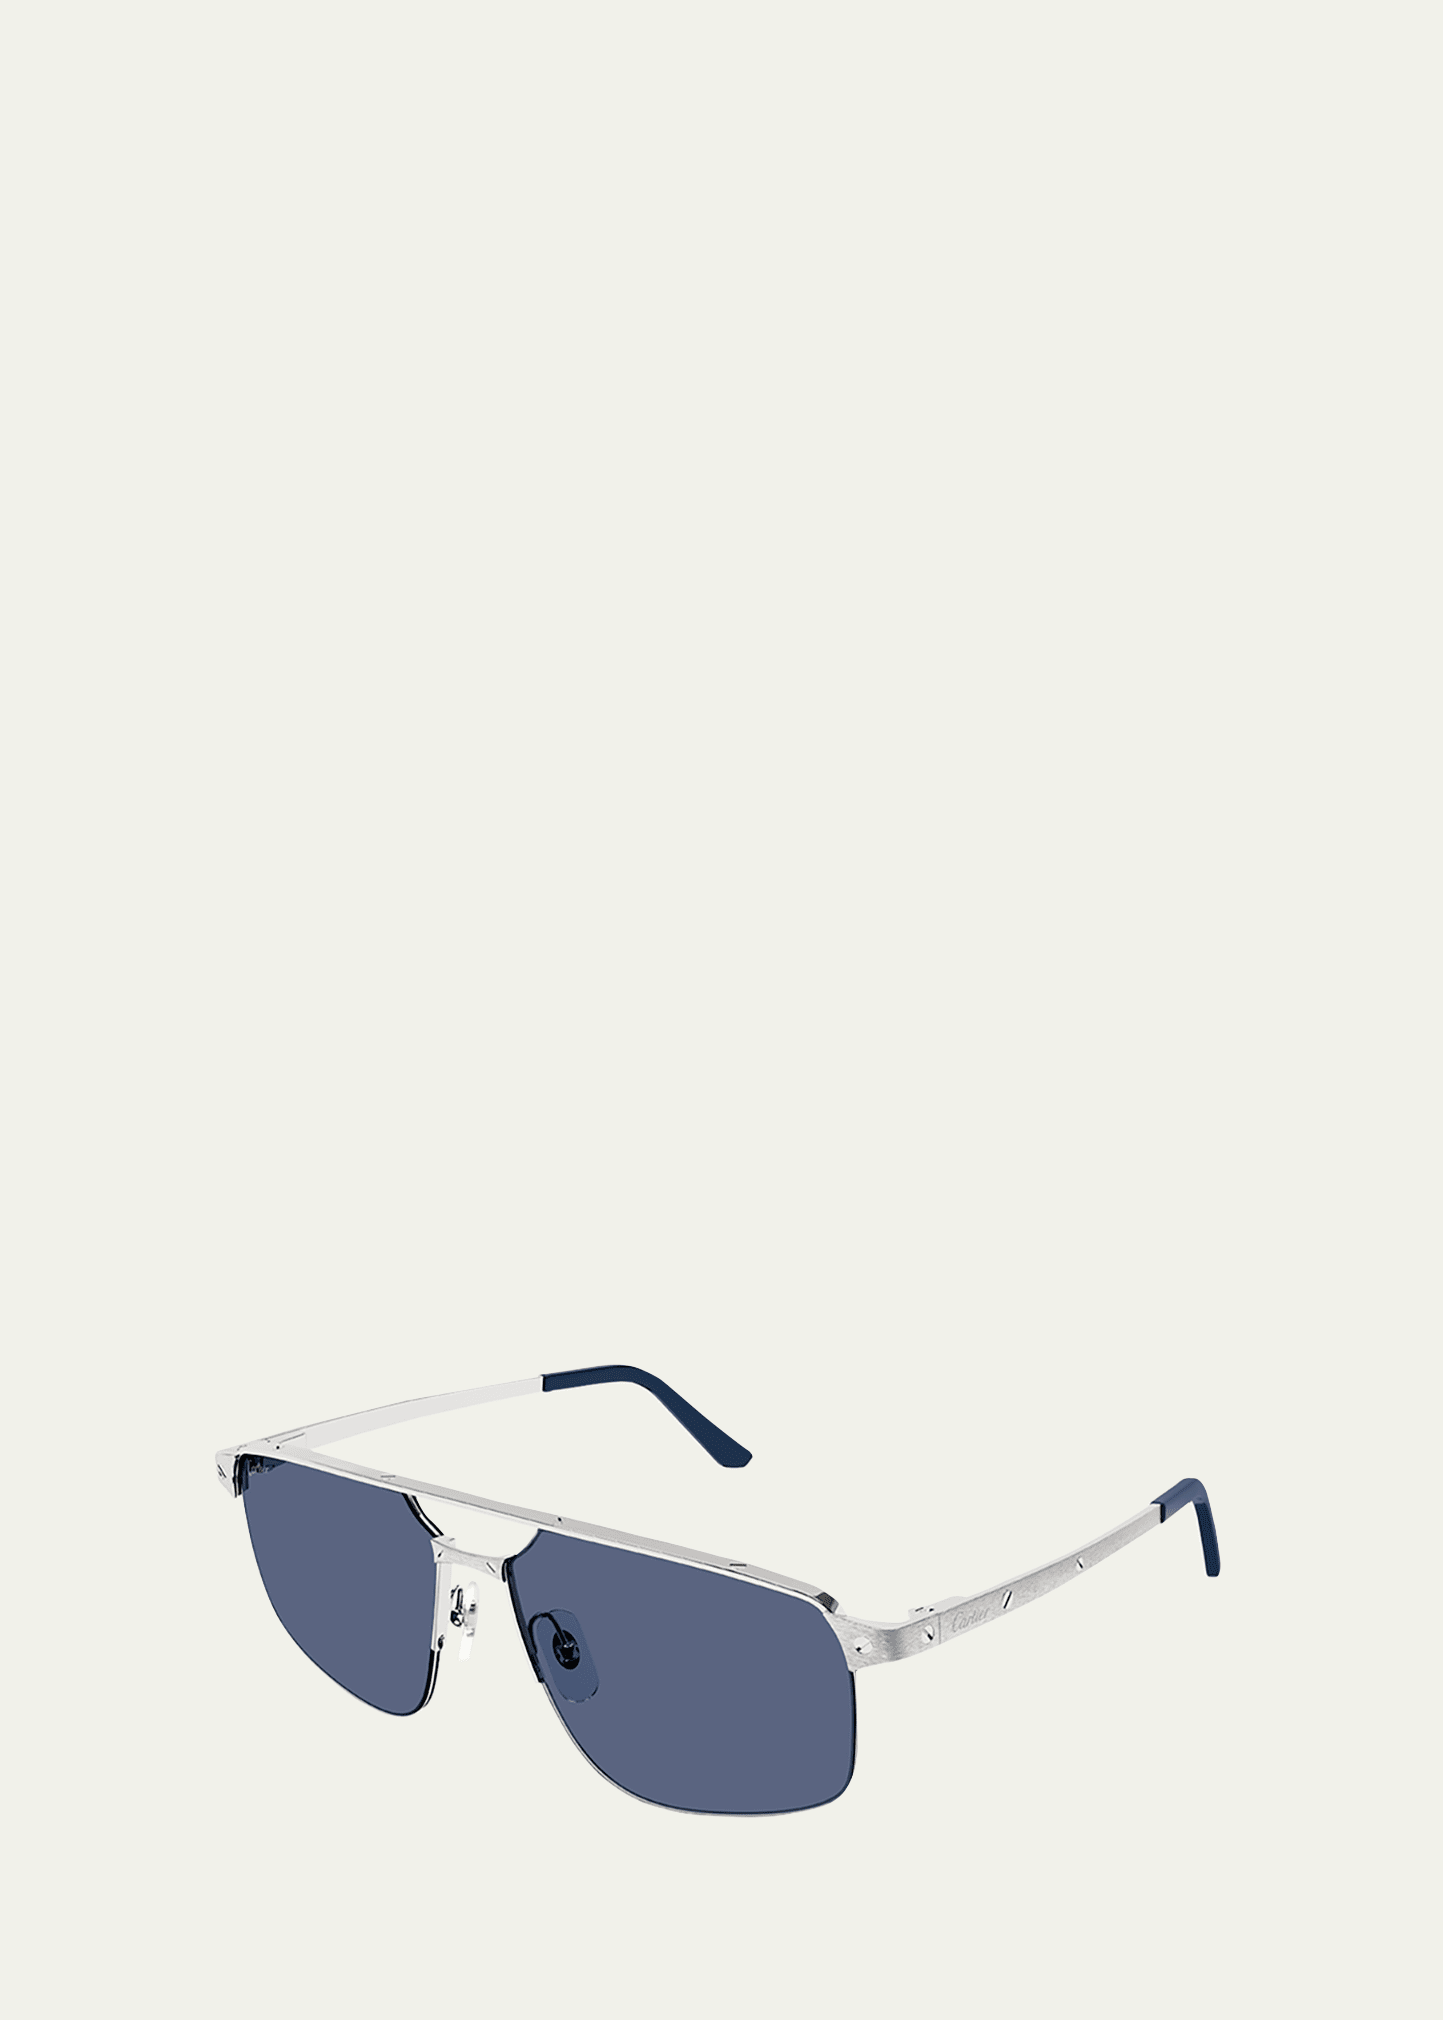 Cartier Men's Santos Evolution 60mm Platinum-plated Navigator Sunglasses In 004 Smooth Platin